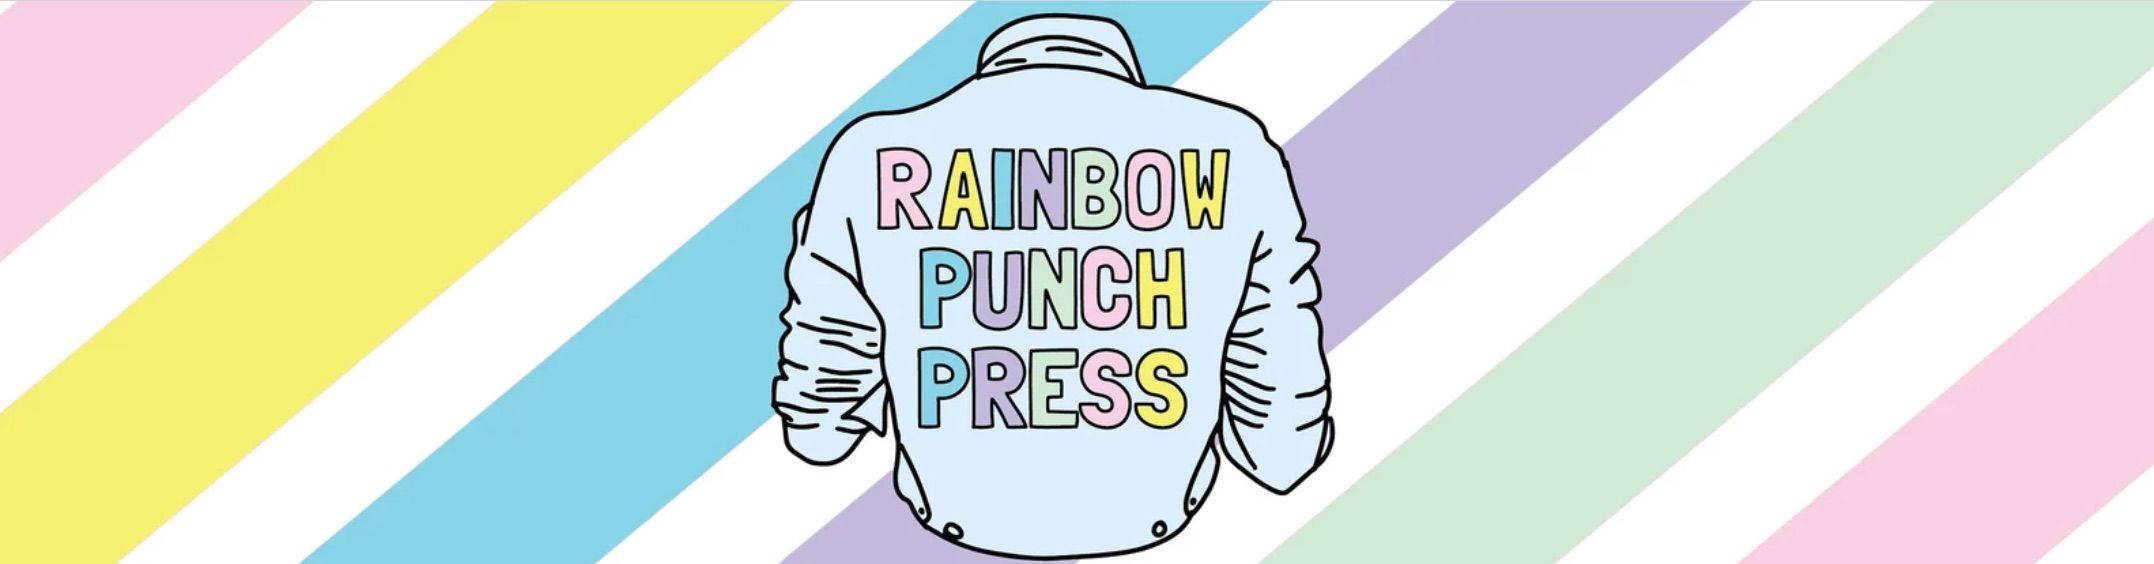 rainbow punch press logo